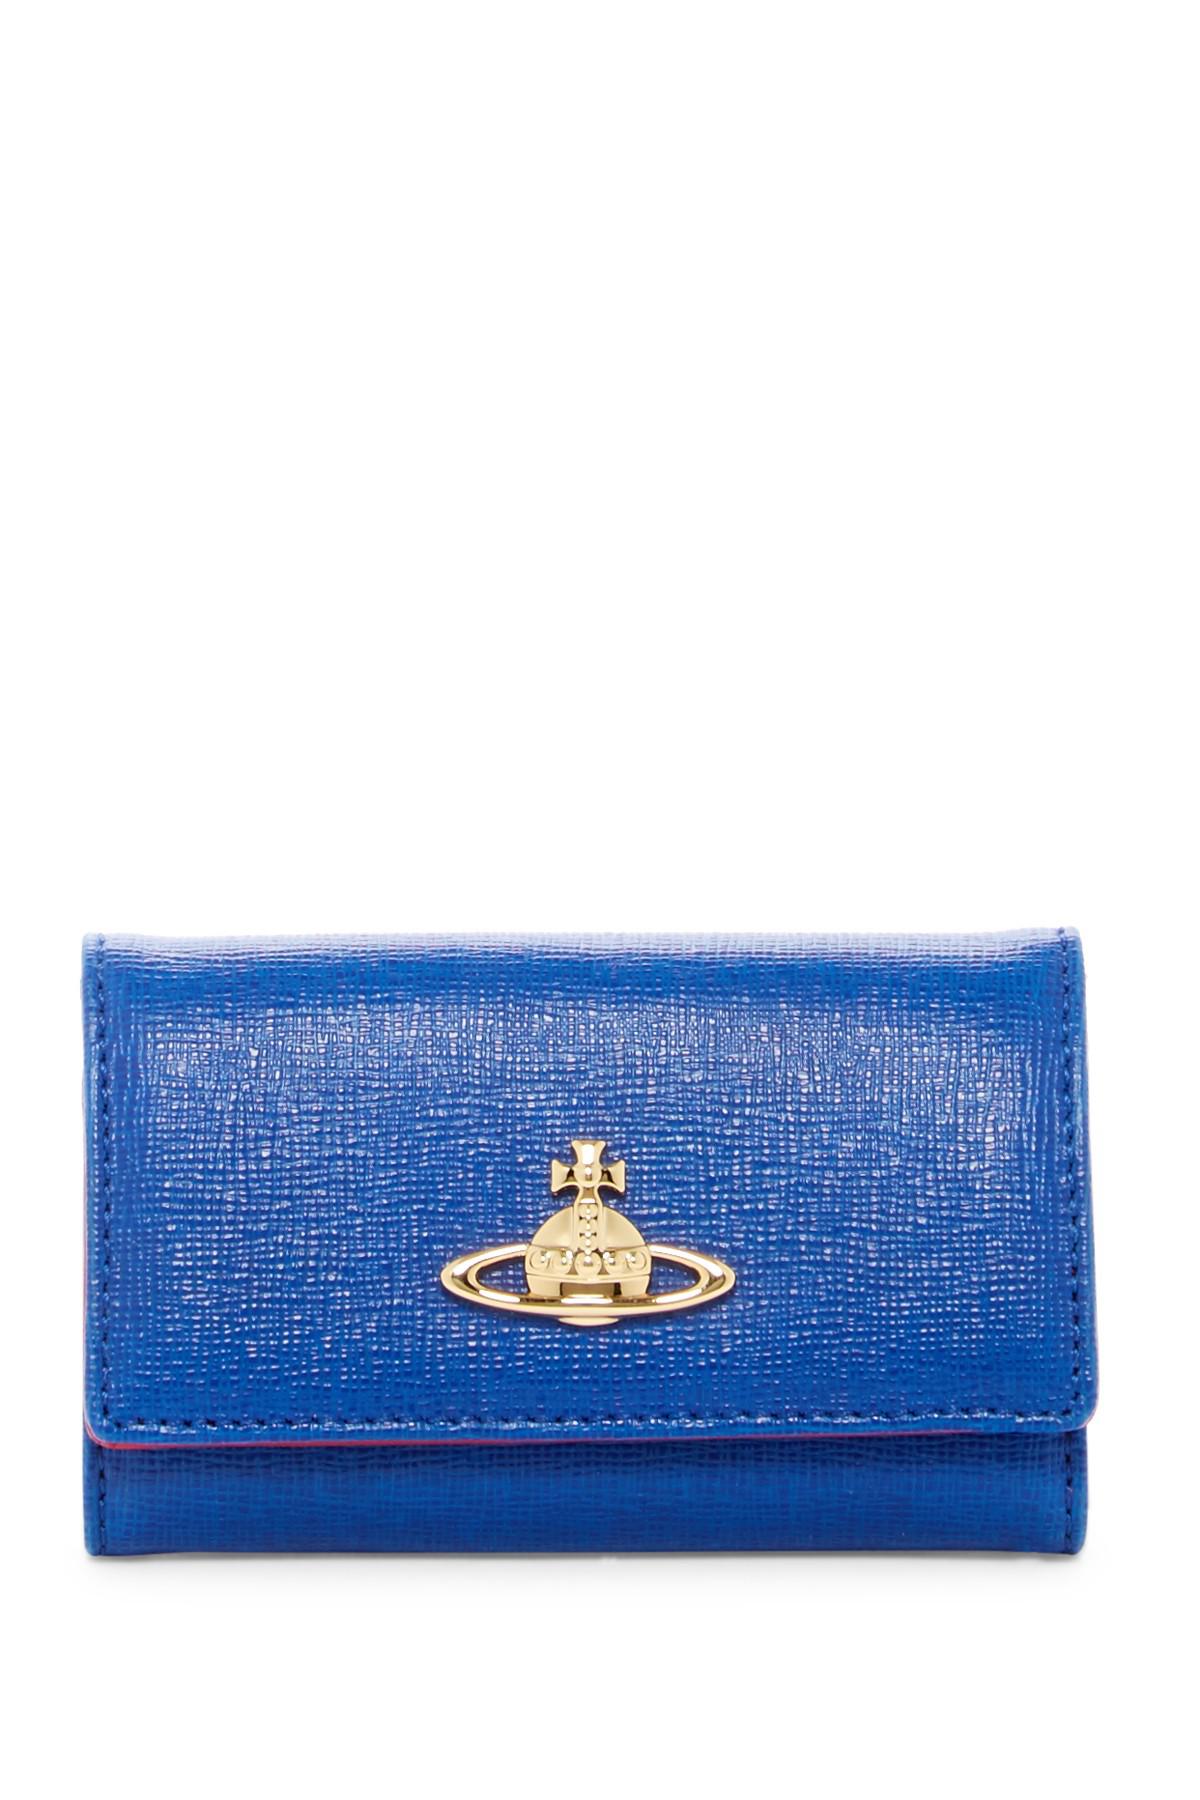 Vivienne Westwood Leather Key Wallet in Blue | Lyst